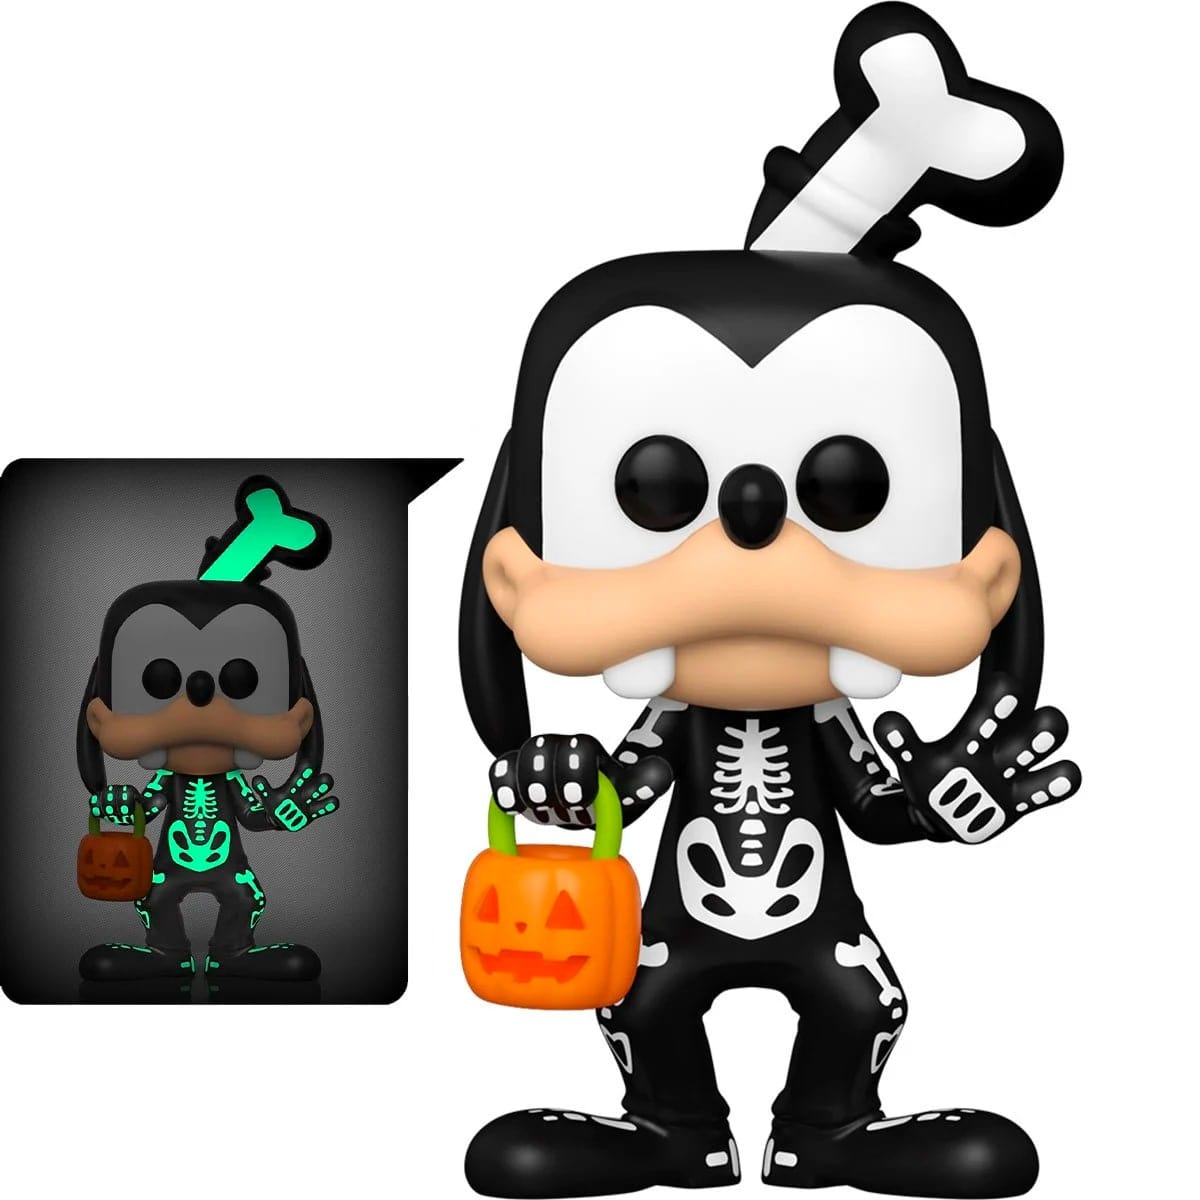 Funko Pop Disney Skeleton Goofy Glow In The Dark #1221 - Exclusive - Pop-O-Loco - Funko